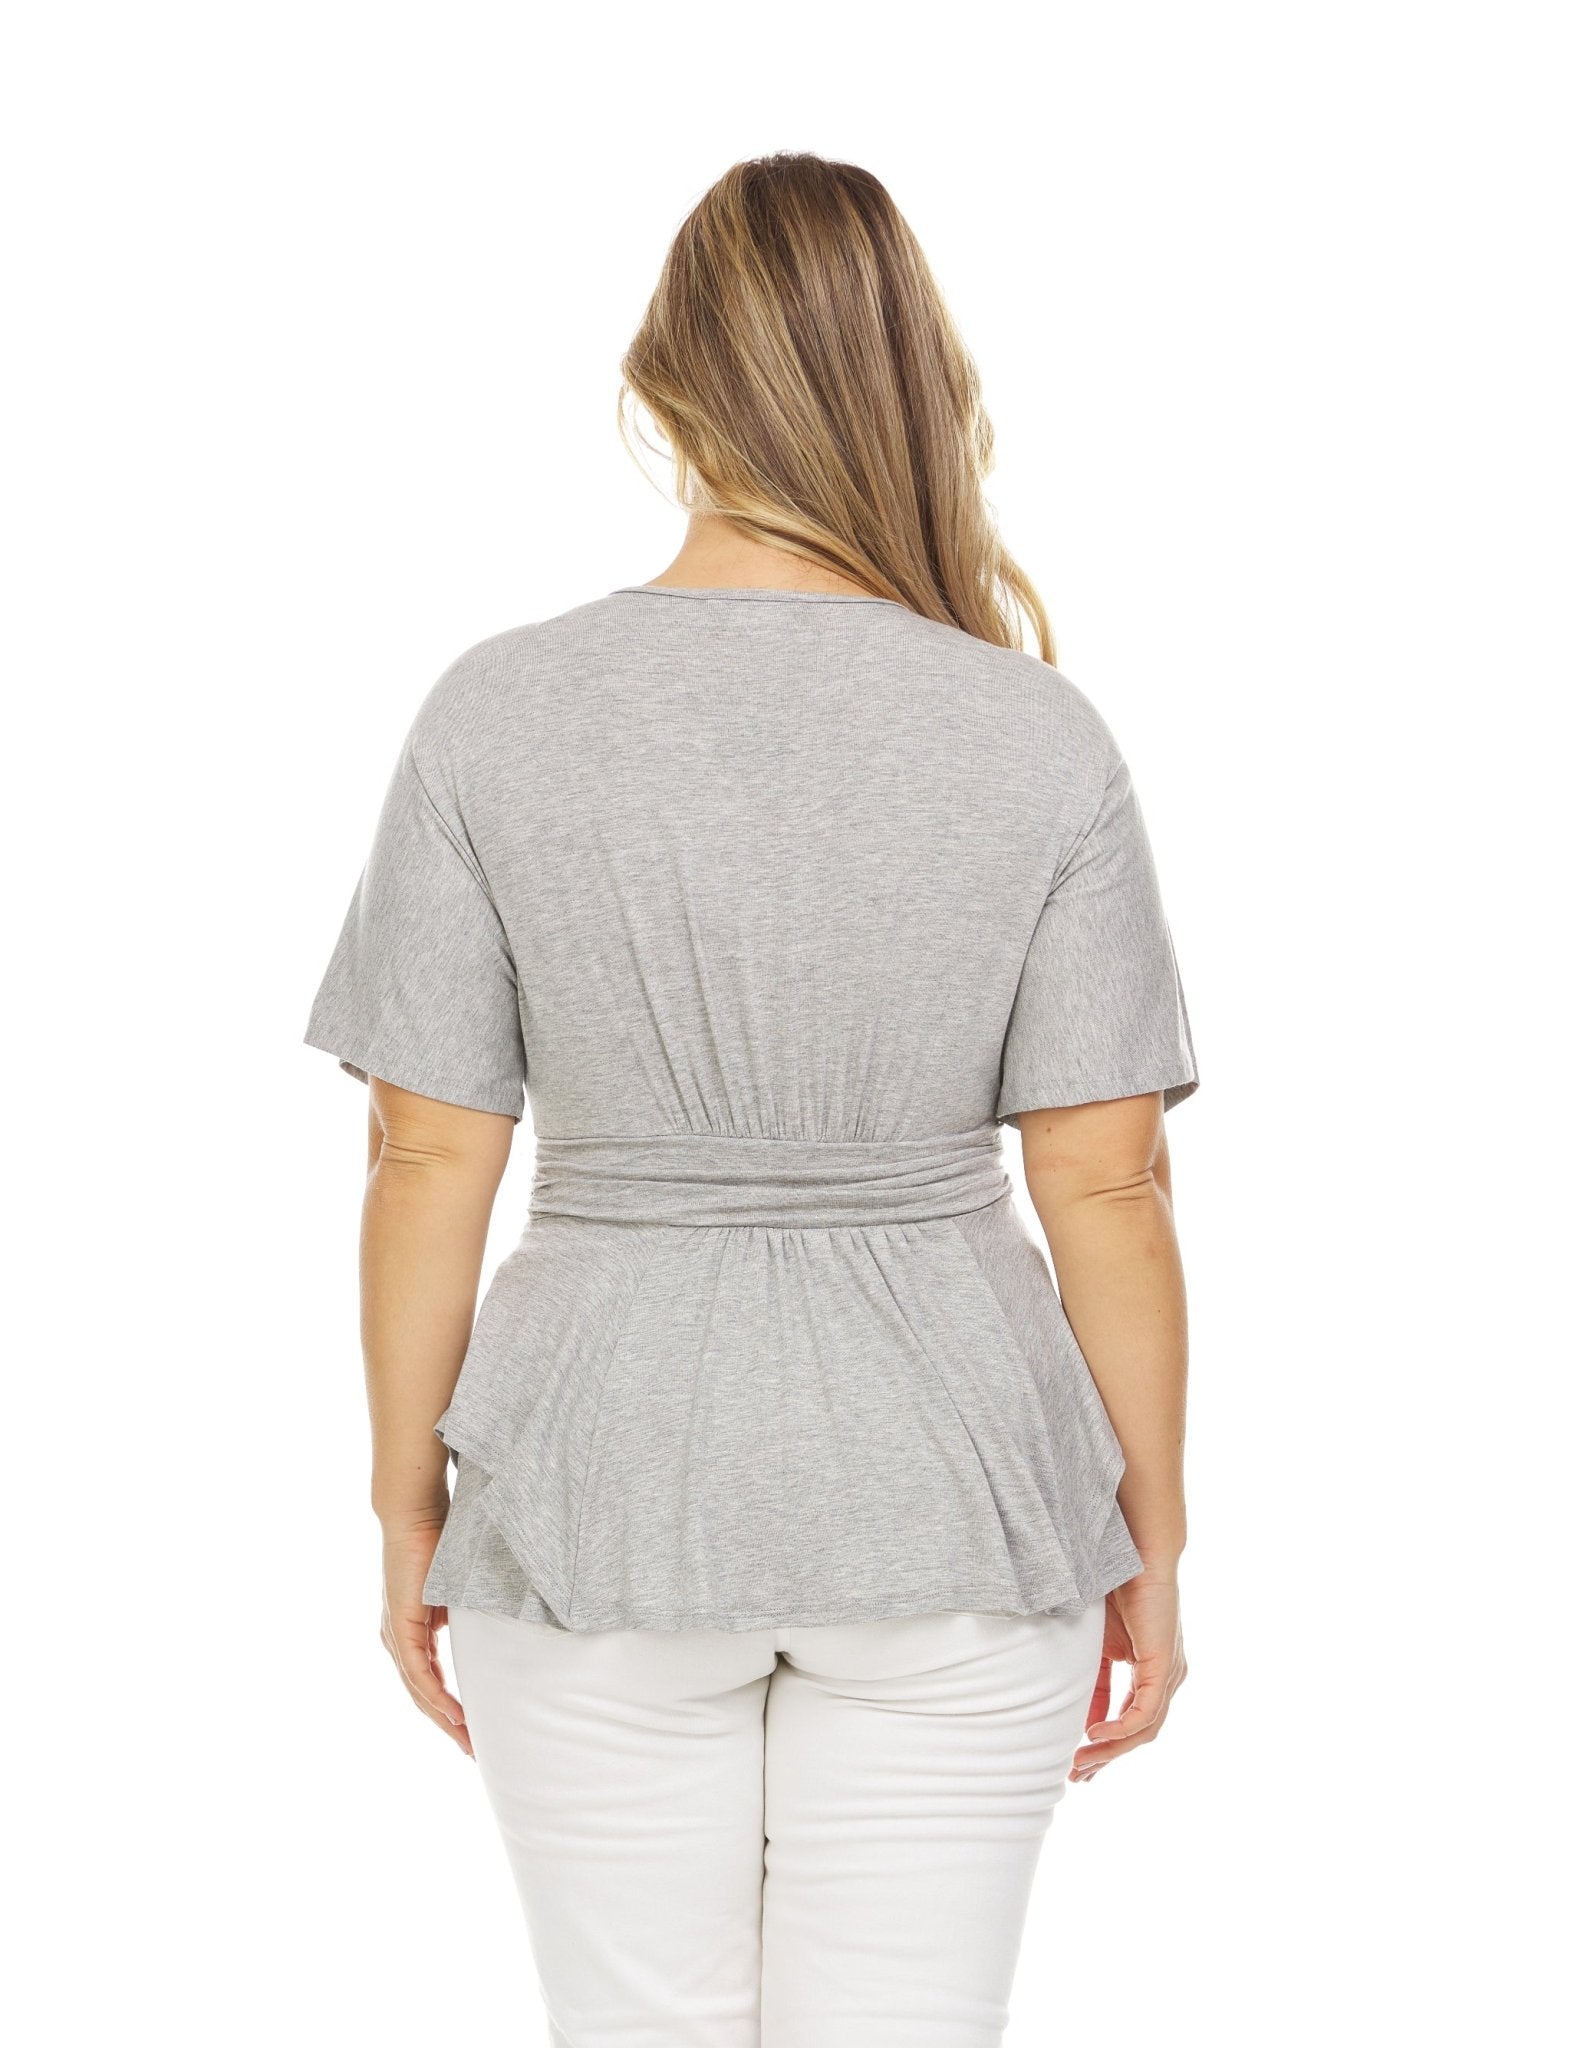 Surplice Front Short Sleeves V-Neck Top - DressbarnShirts & Blouses